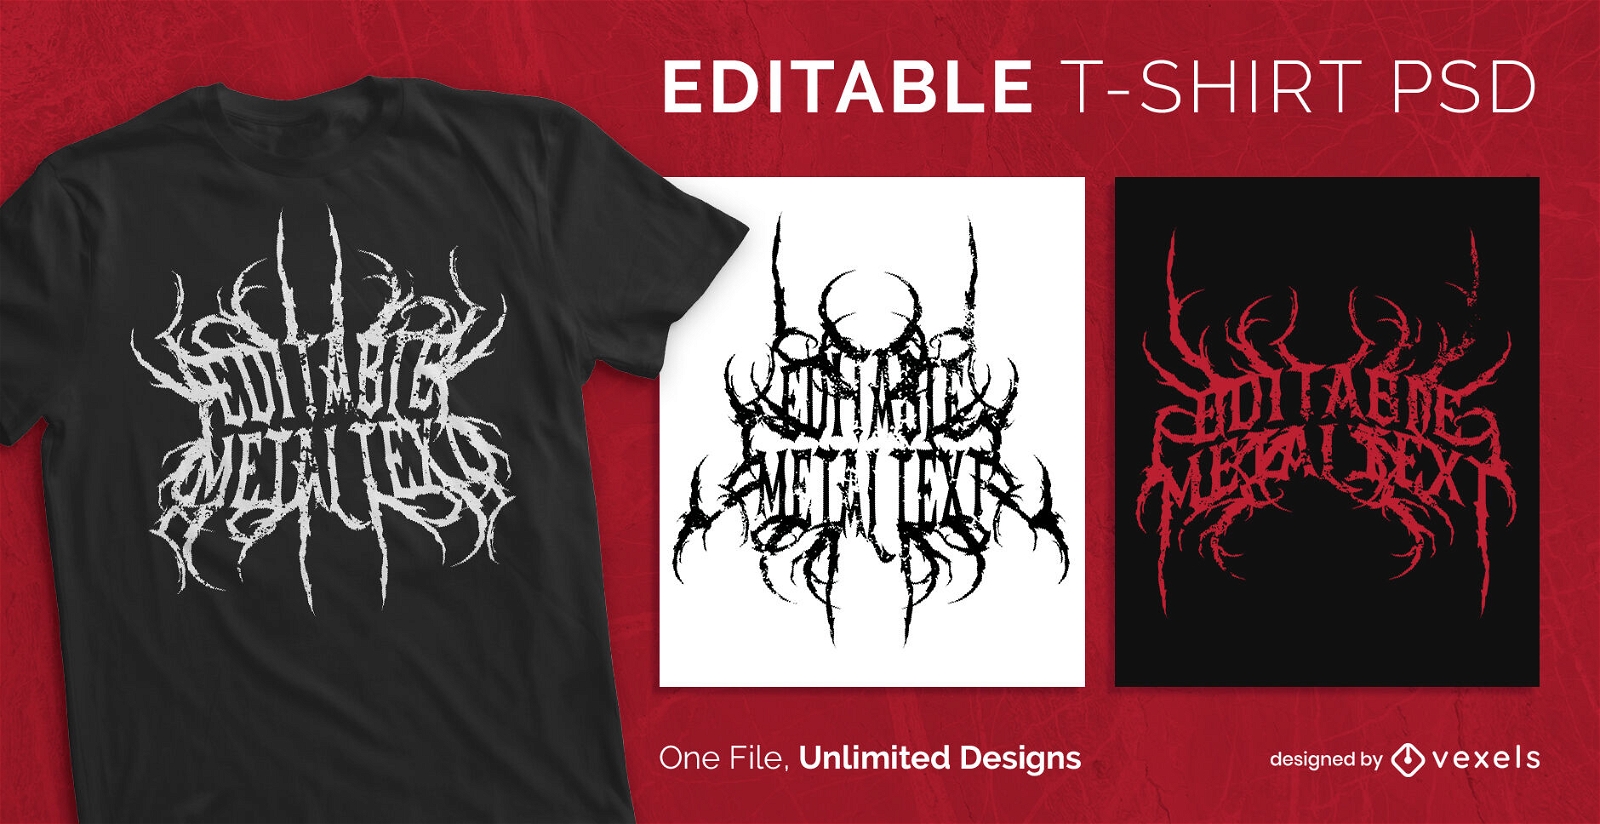 Death metal scalable t-shirt psd